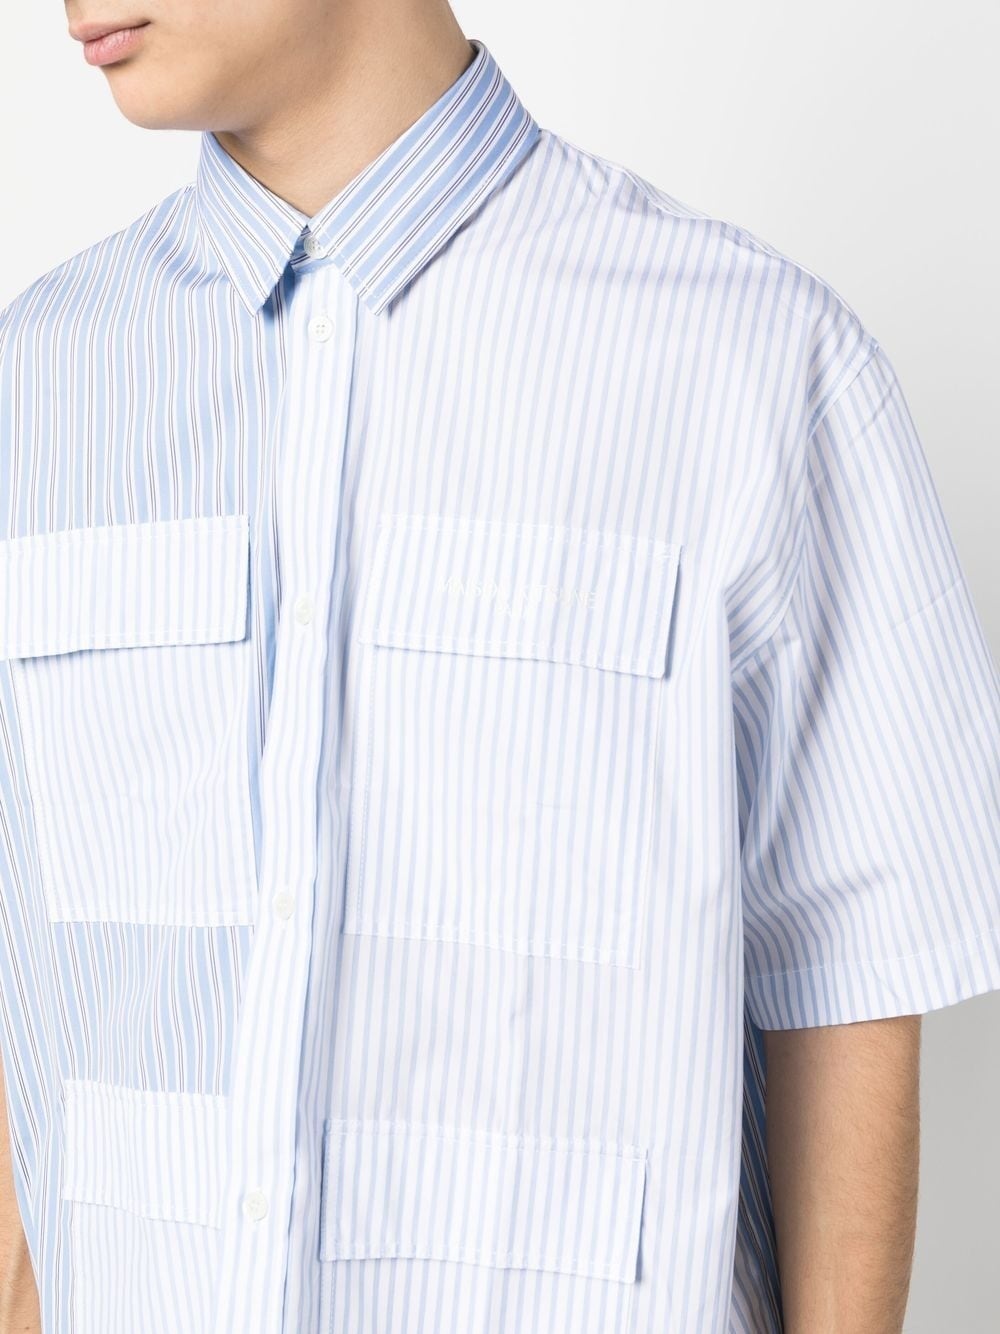 colour-block striped shirt - 5